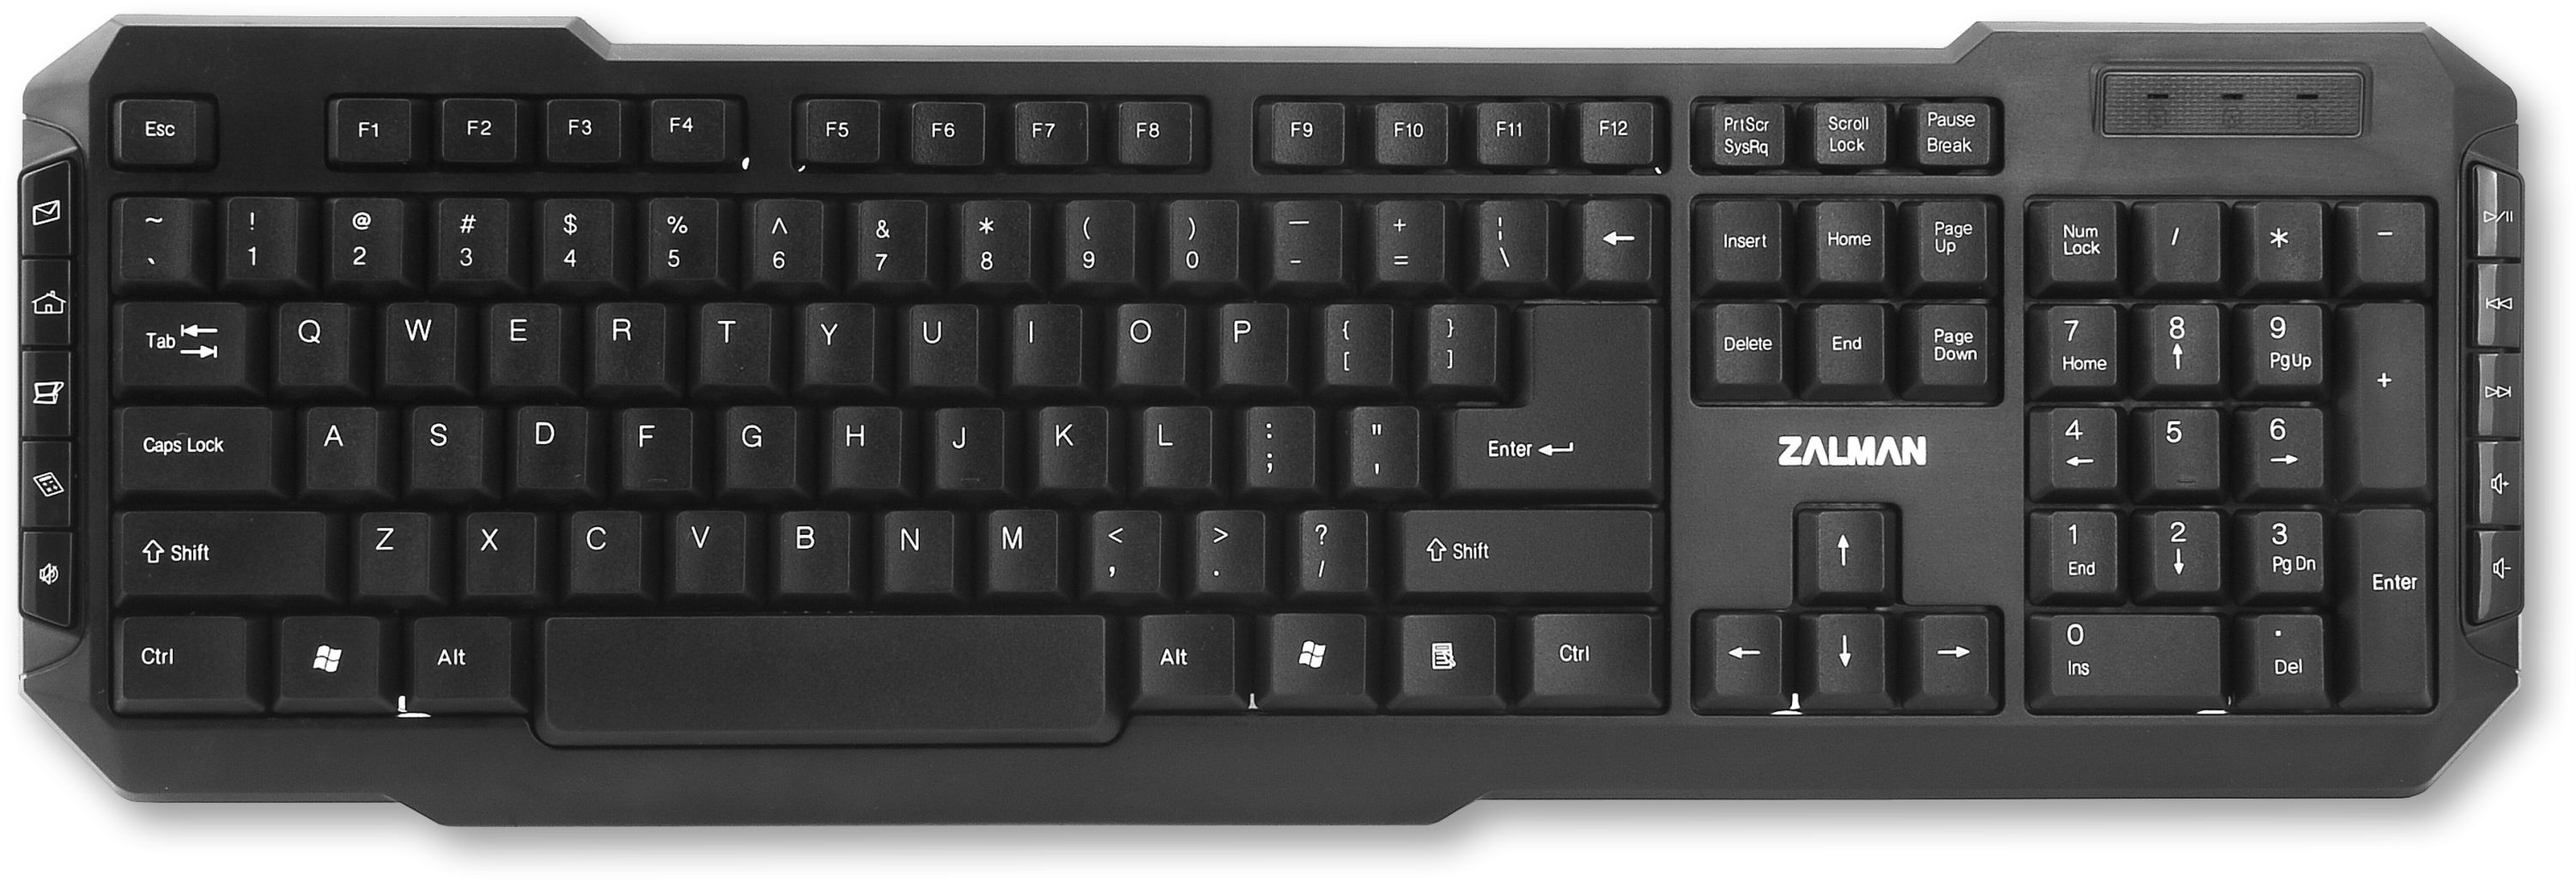 10-key keyboard for mac